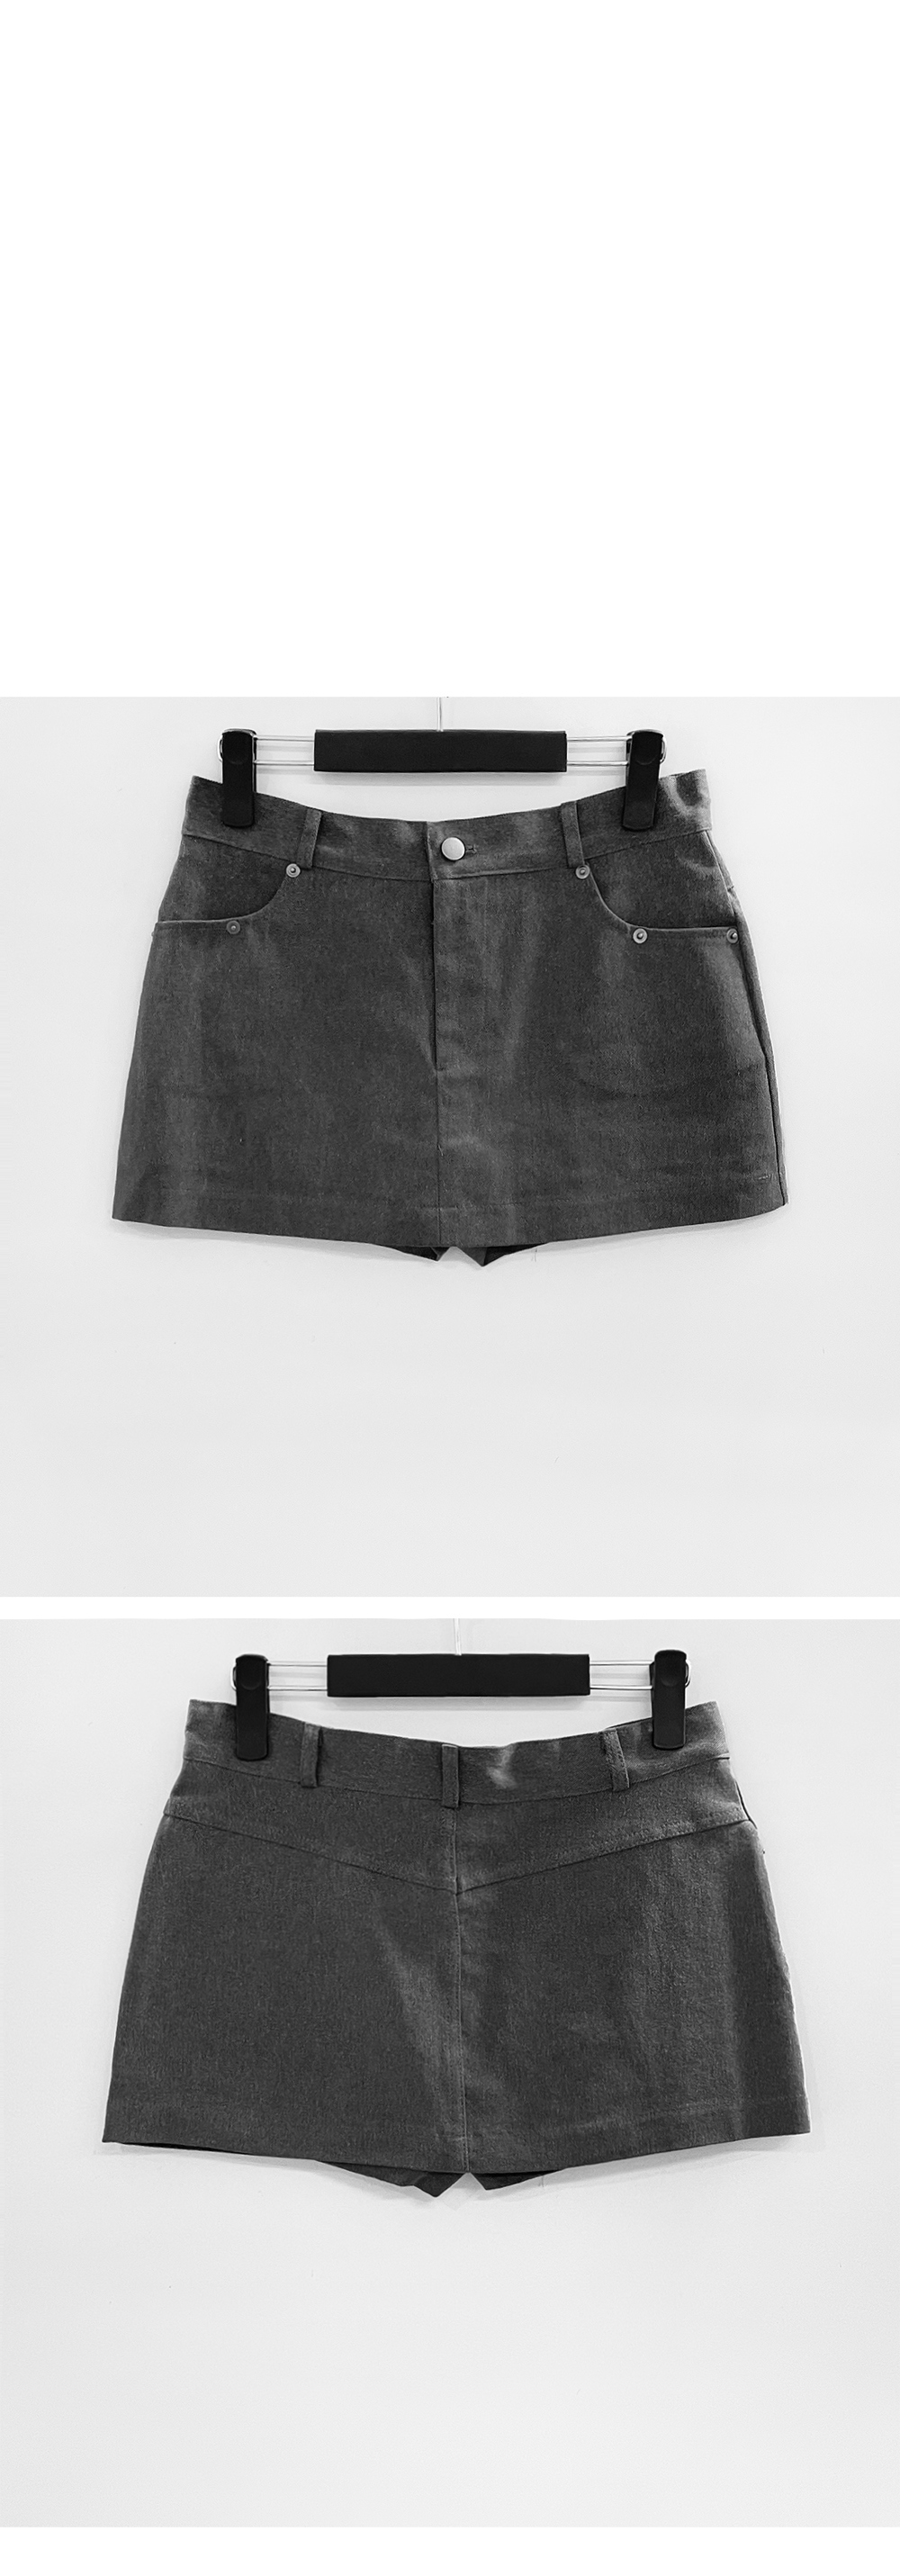 mini skirt grey color image-S1L10